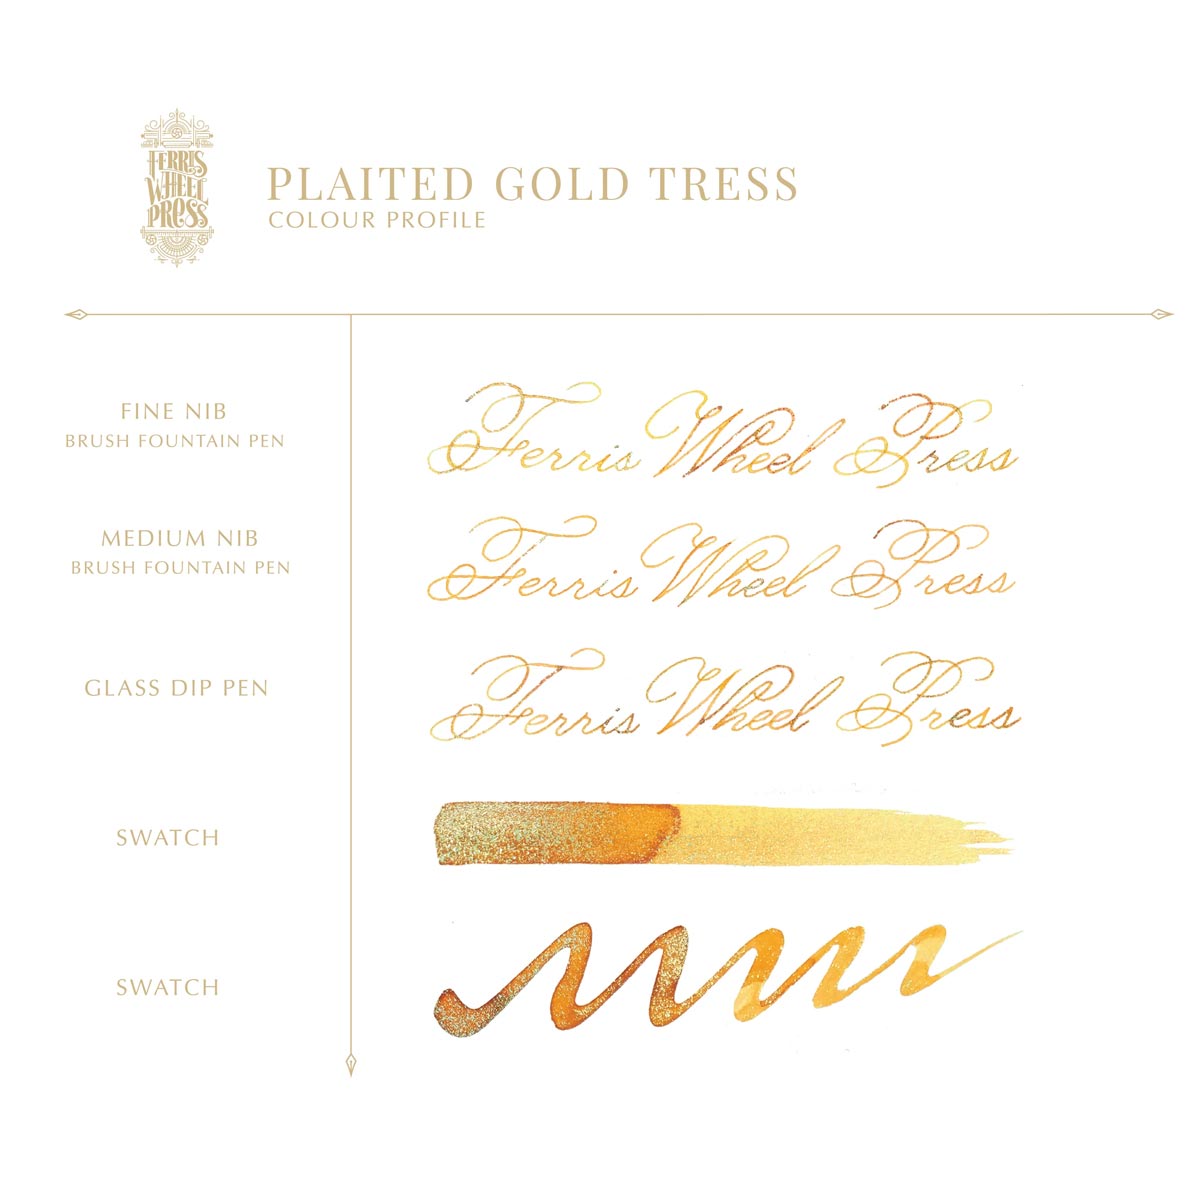 Ferris Wheel Press - Ferritales Ink - Plaited Gold Tress